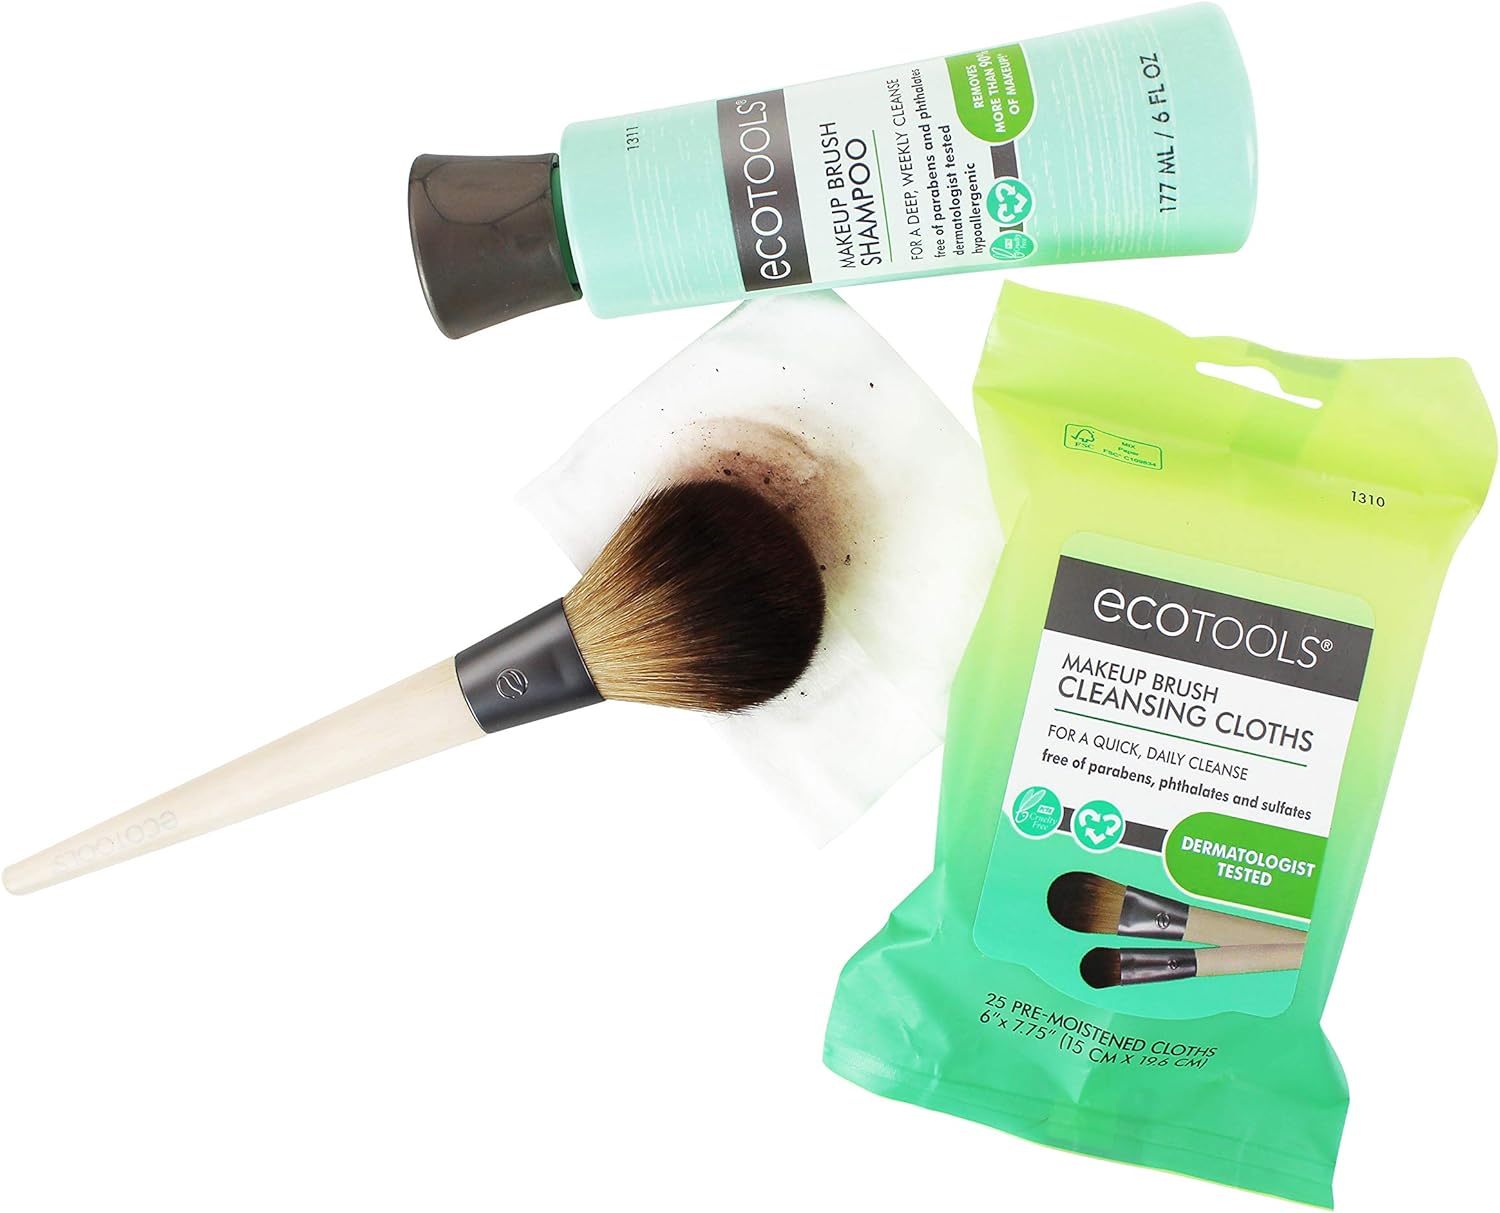 EcoTools Eye Enhancing Duo Brush Set Define Blend & Smudge Eyeshadow & Liner